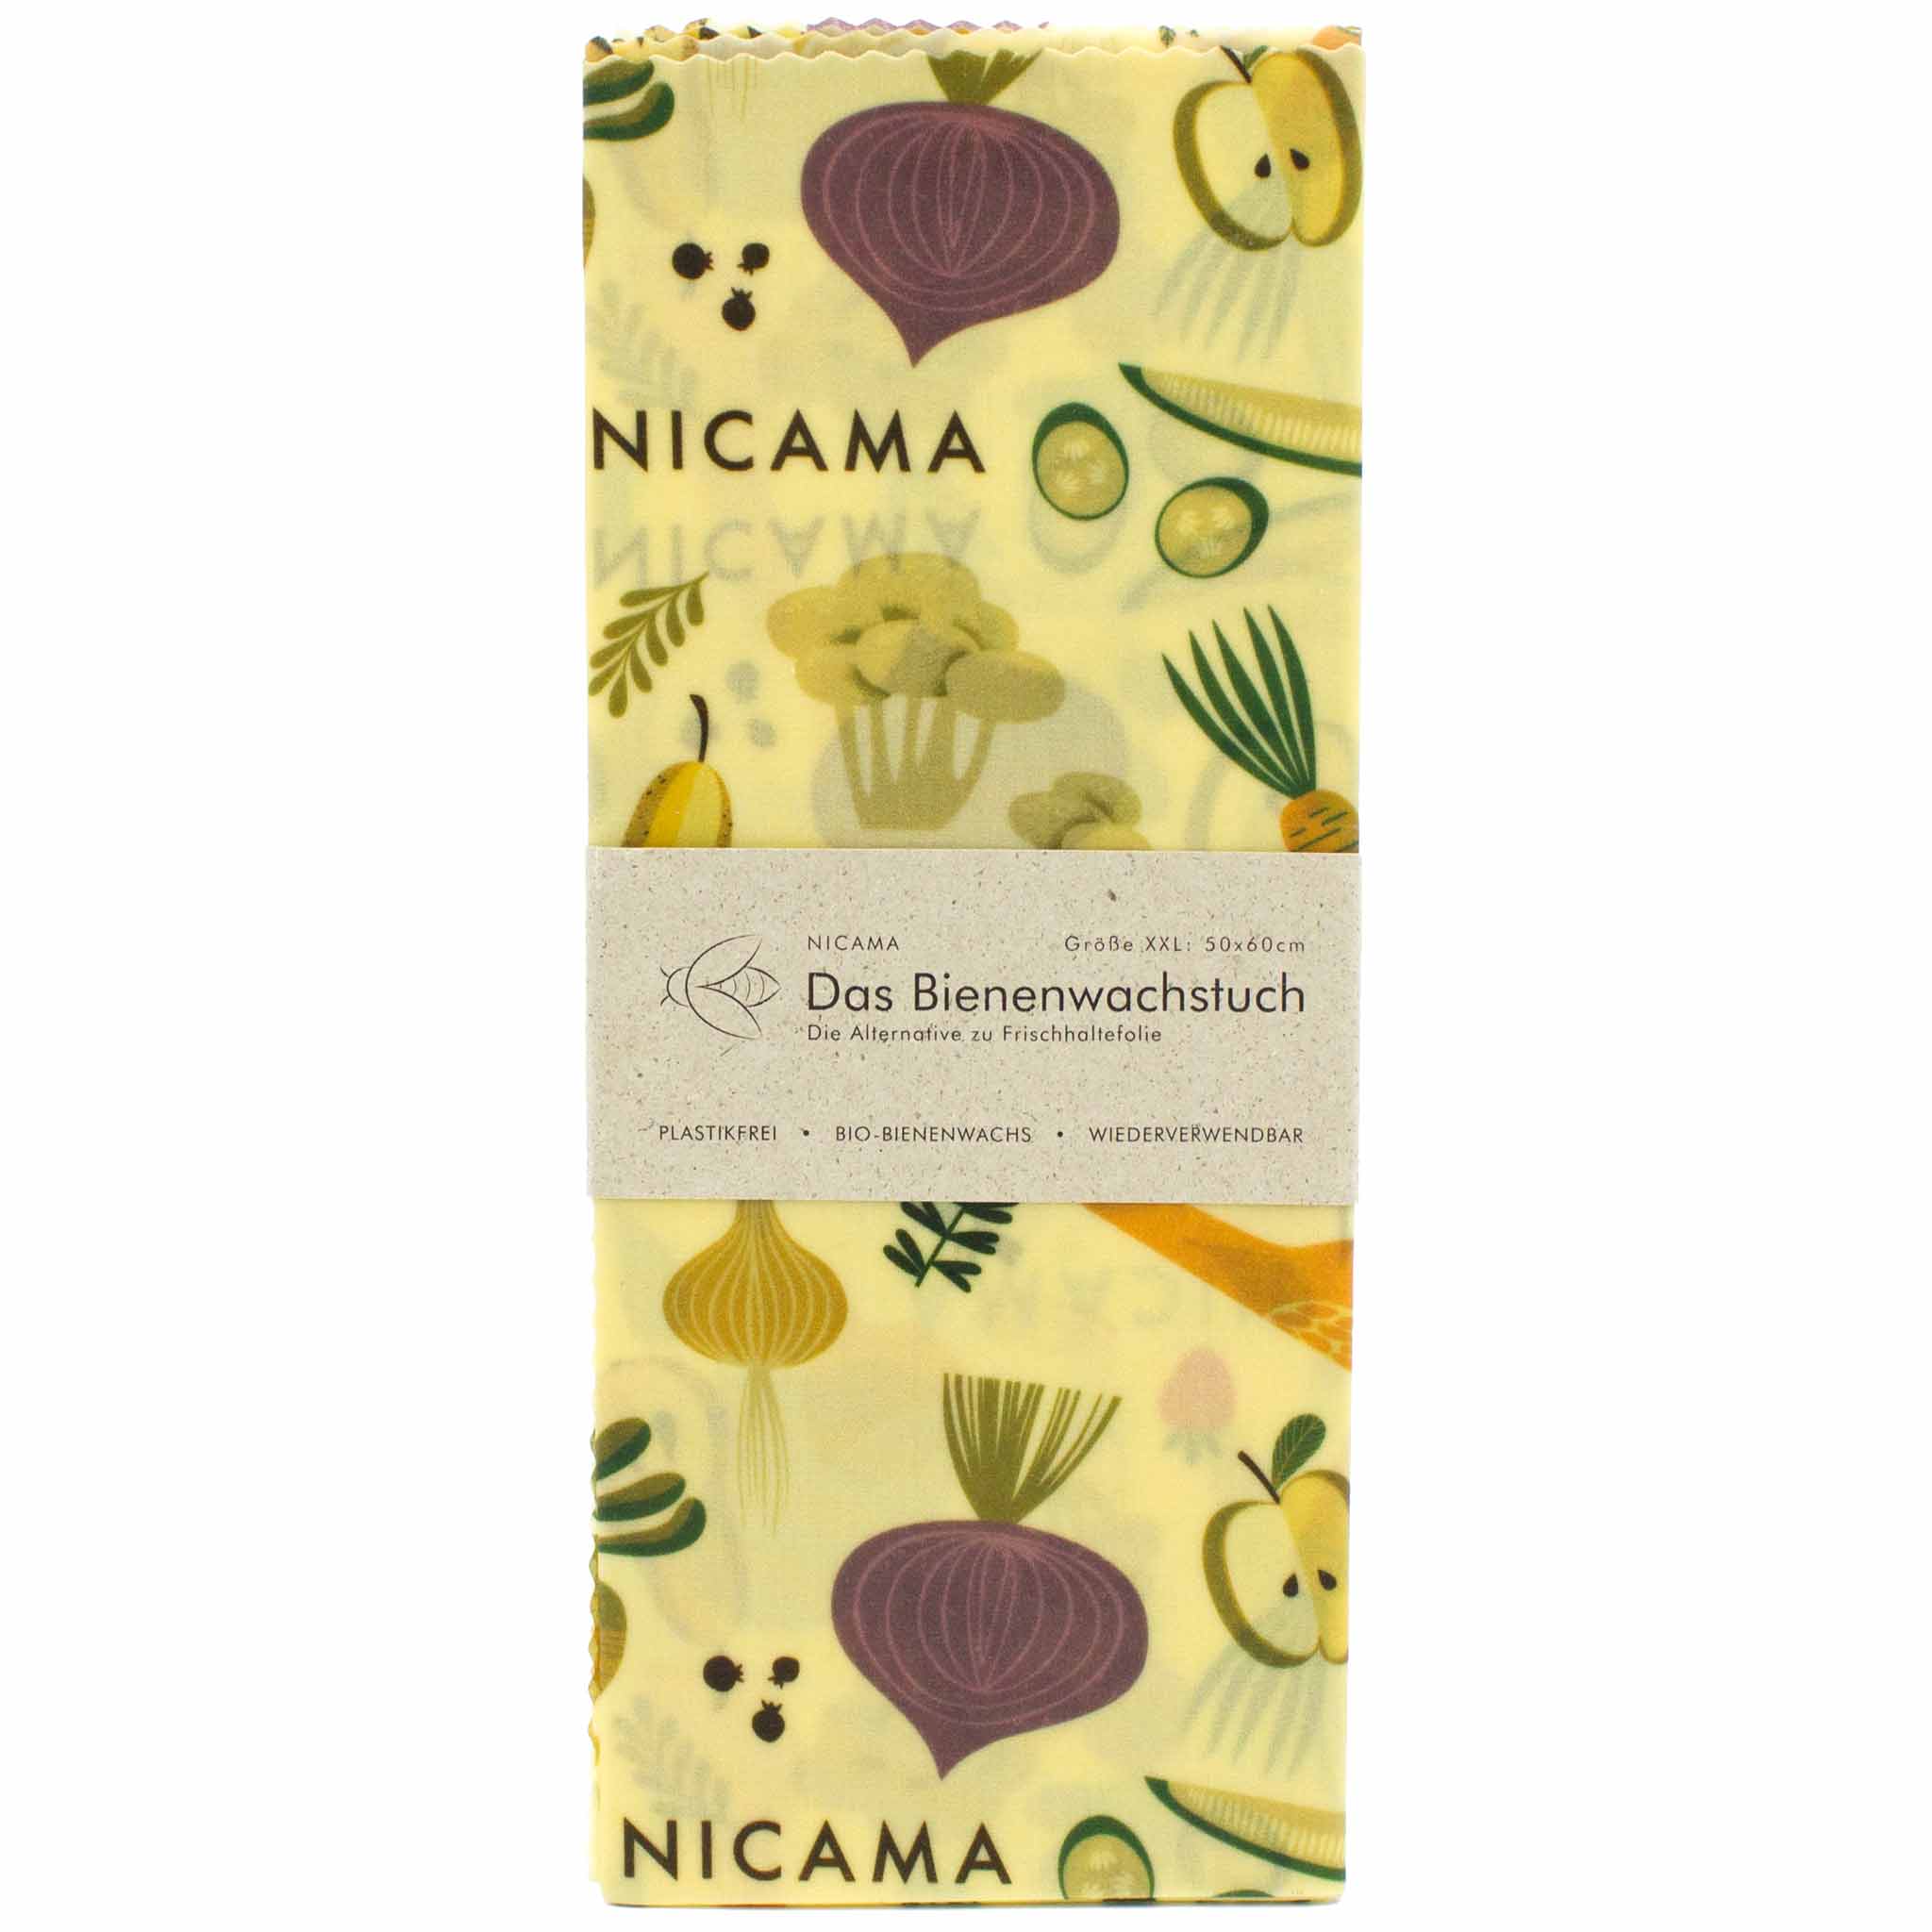 NICAMA Bienenwachstuch 60x50 cm-Muster